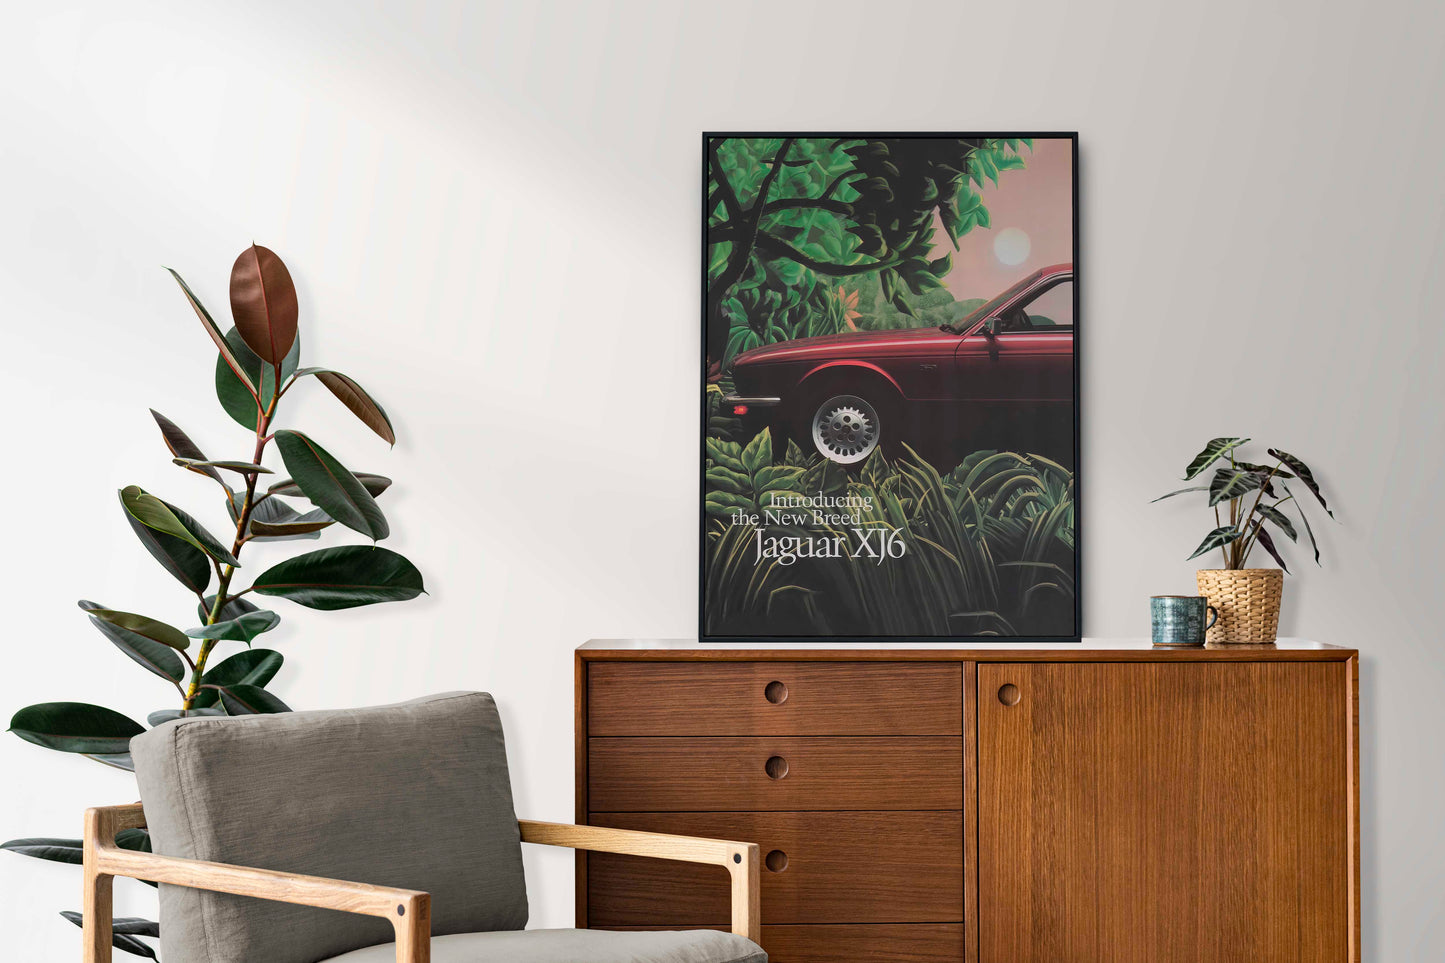 Jaguar XJ6 Poster